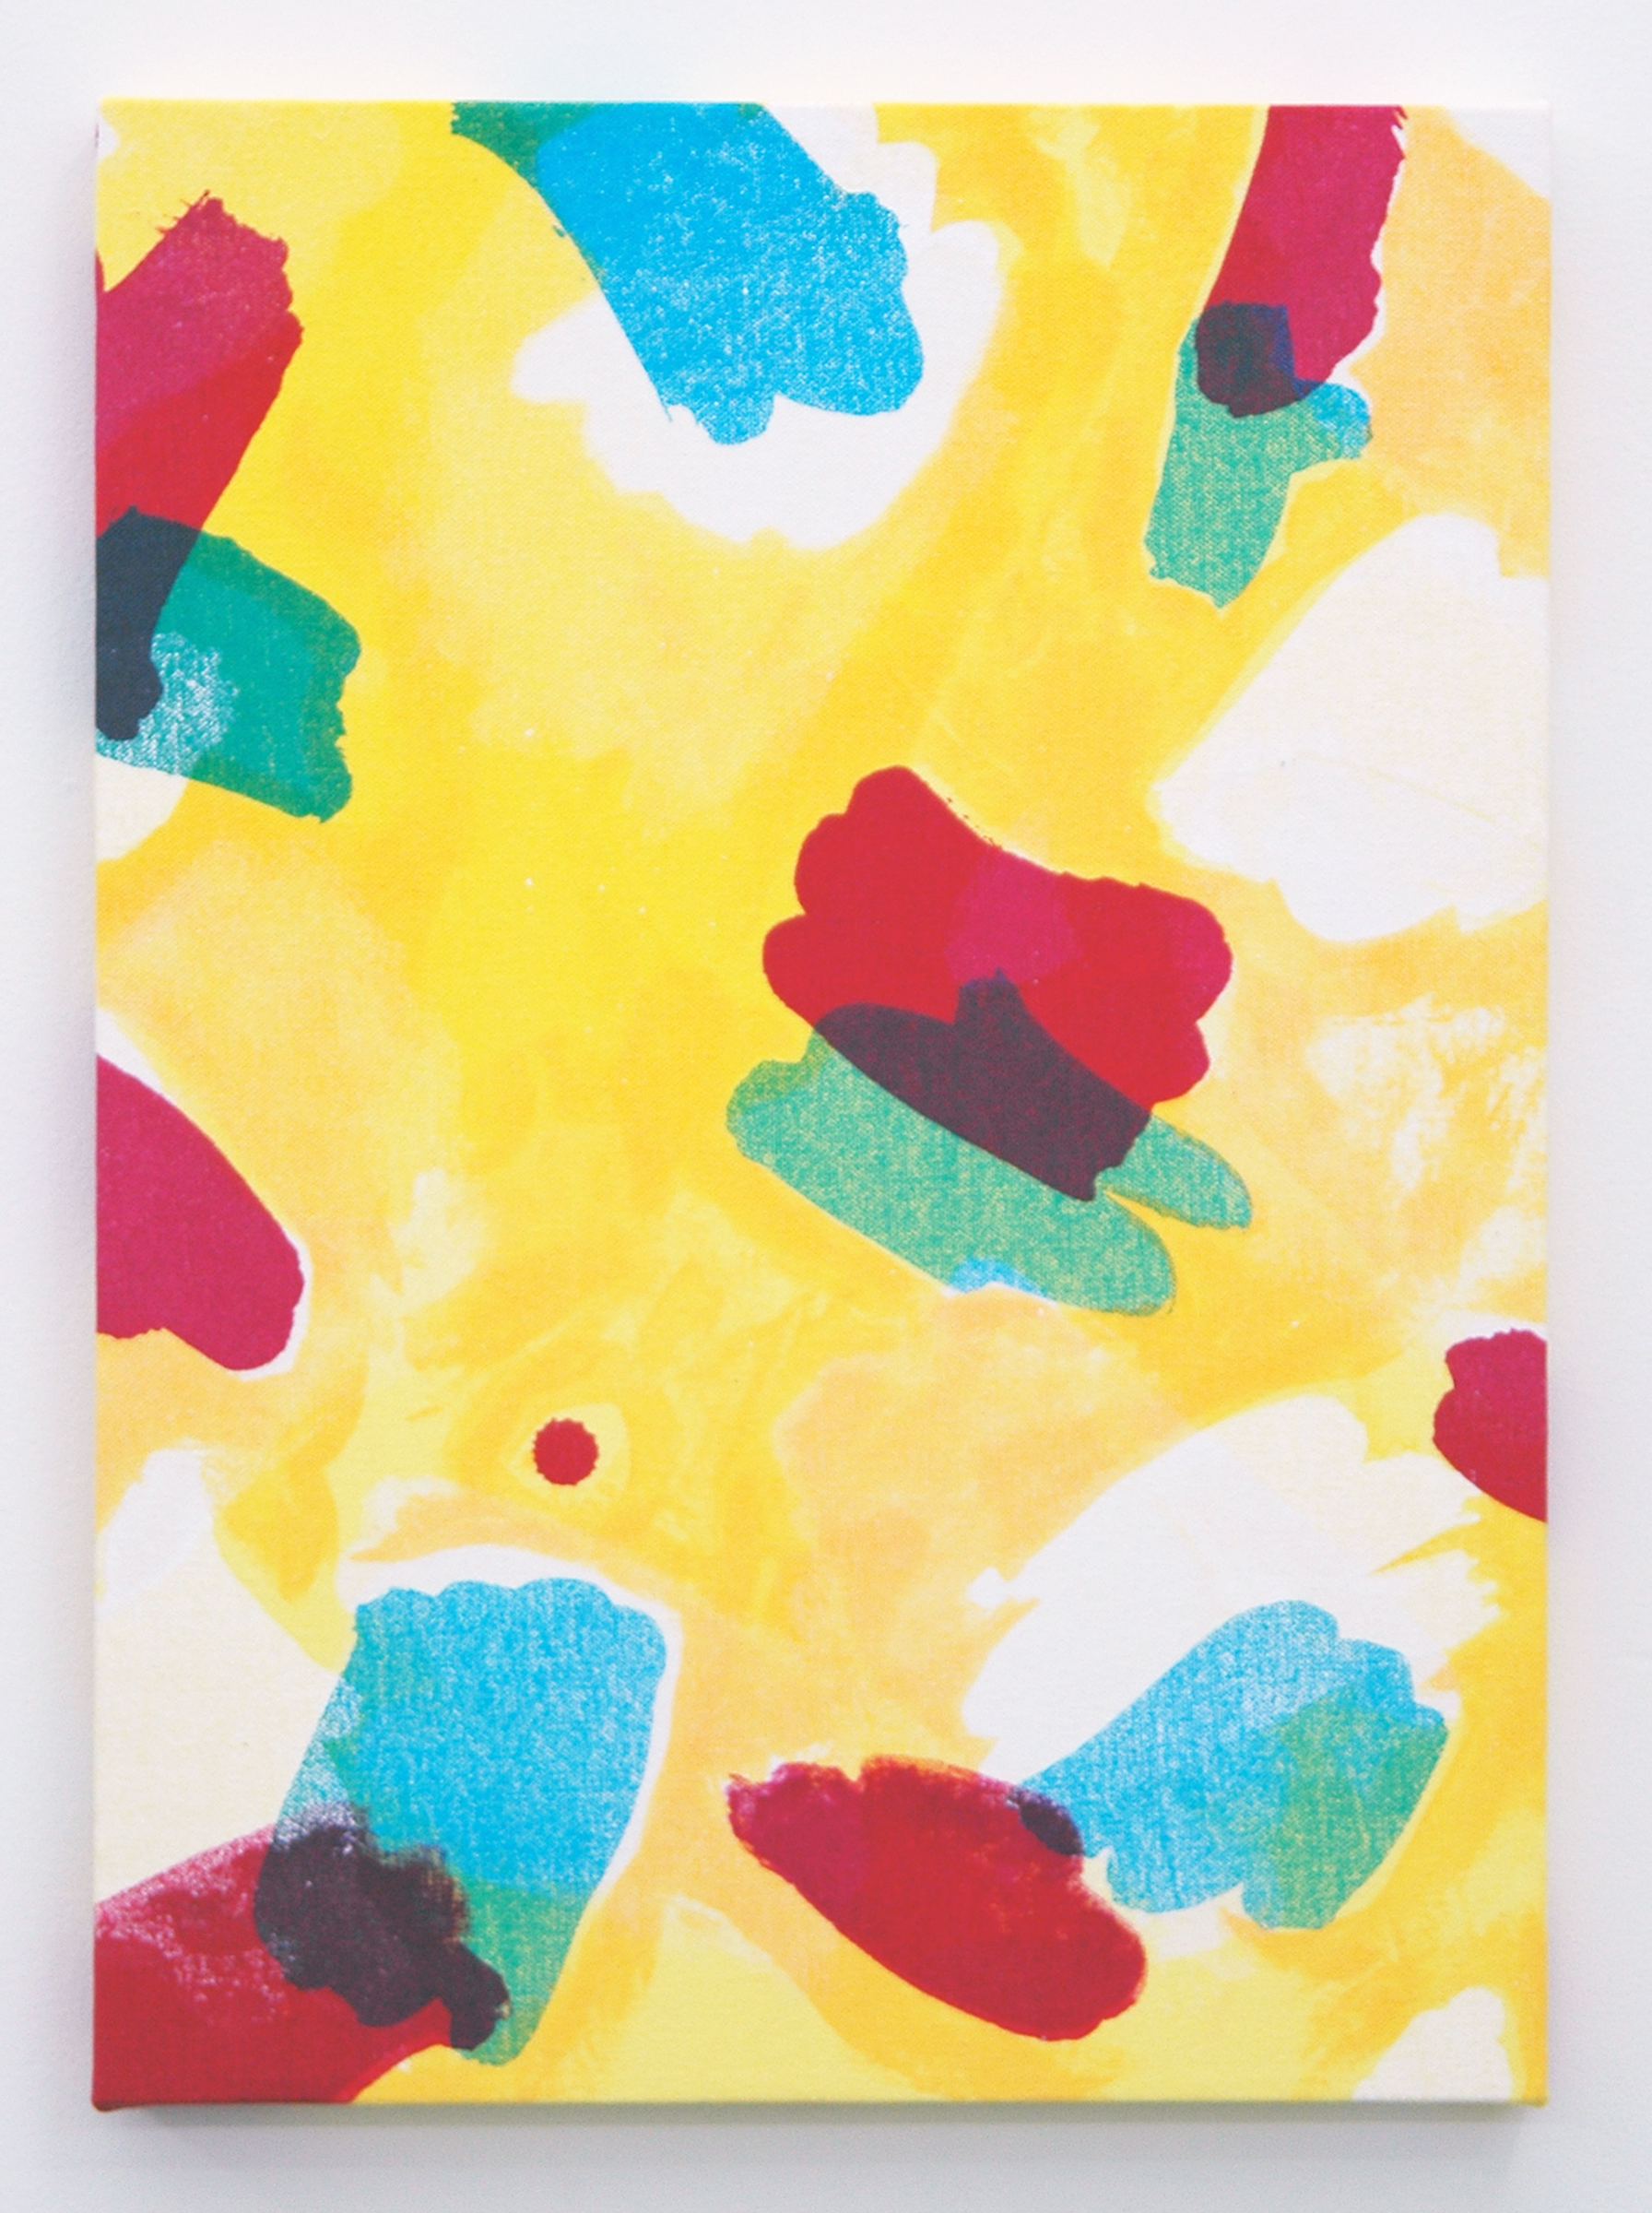   /SLASH/  Amanda Curreri, &nbsp;Calm Lunatics (Pattern for Performance) , fabric dye, acrylic, dye remover on cotton 18" x 13", 2014 